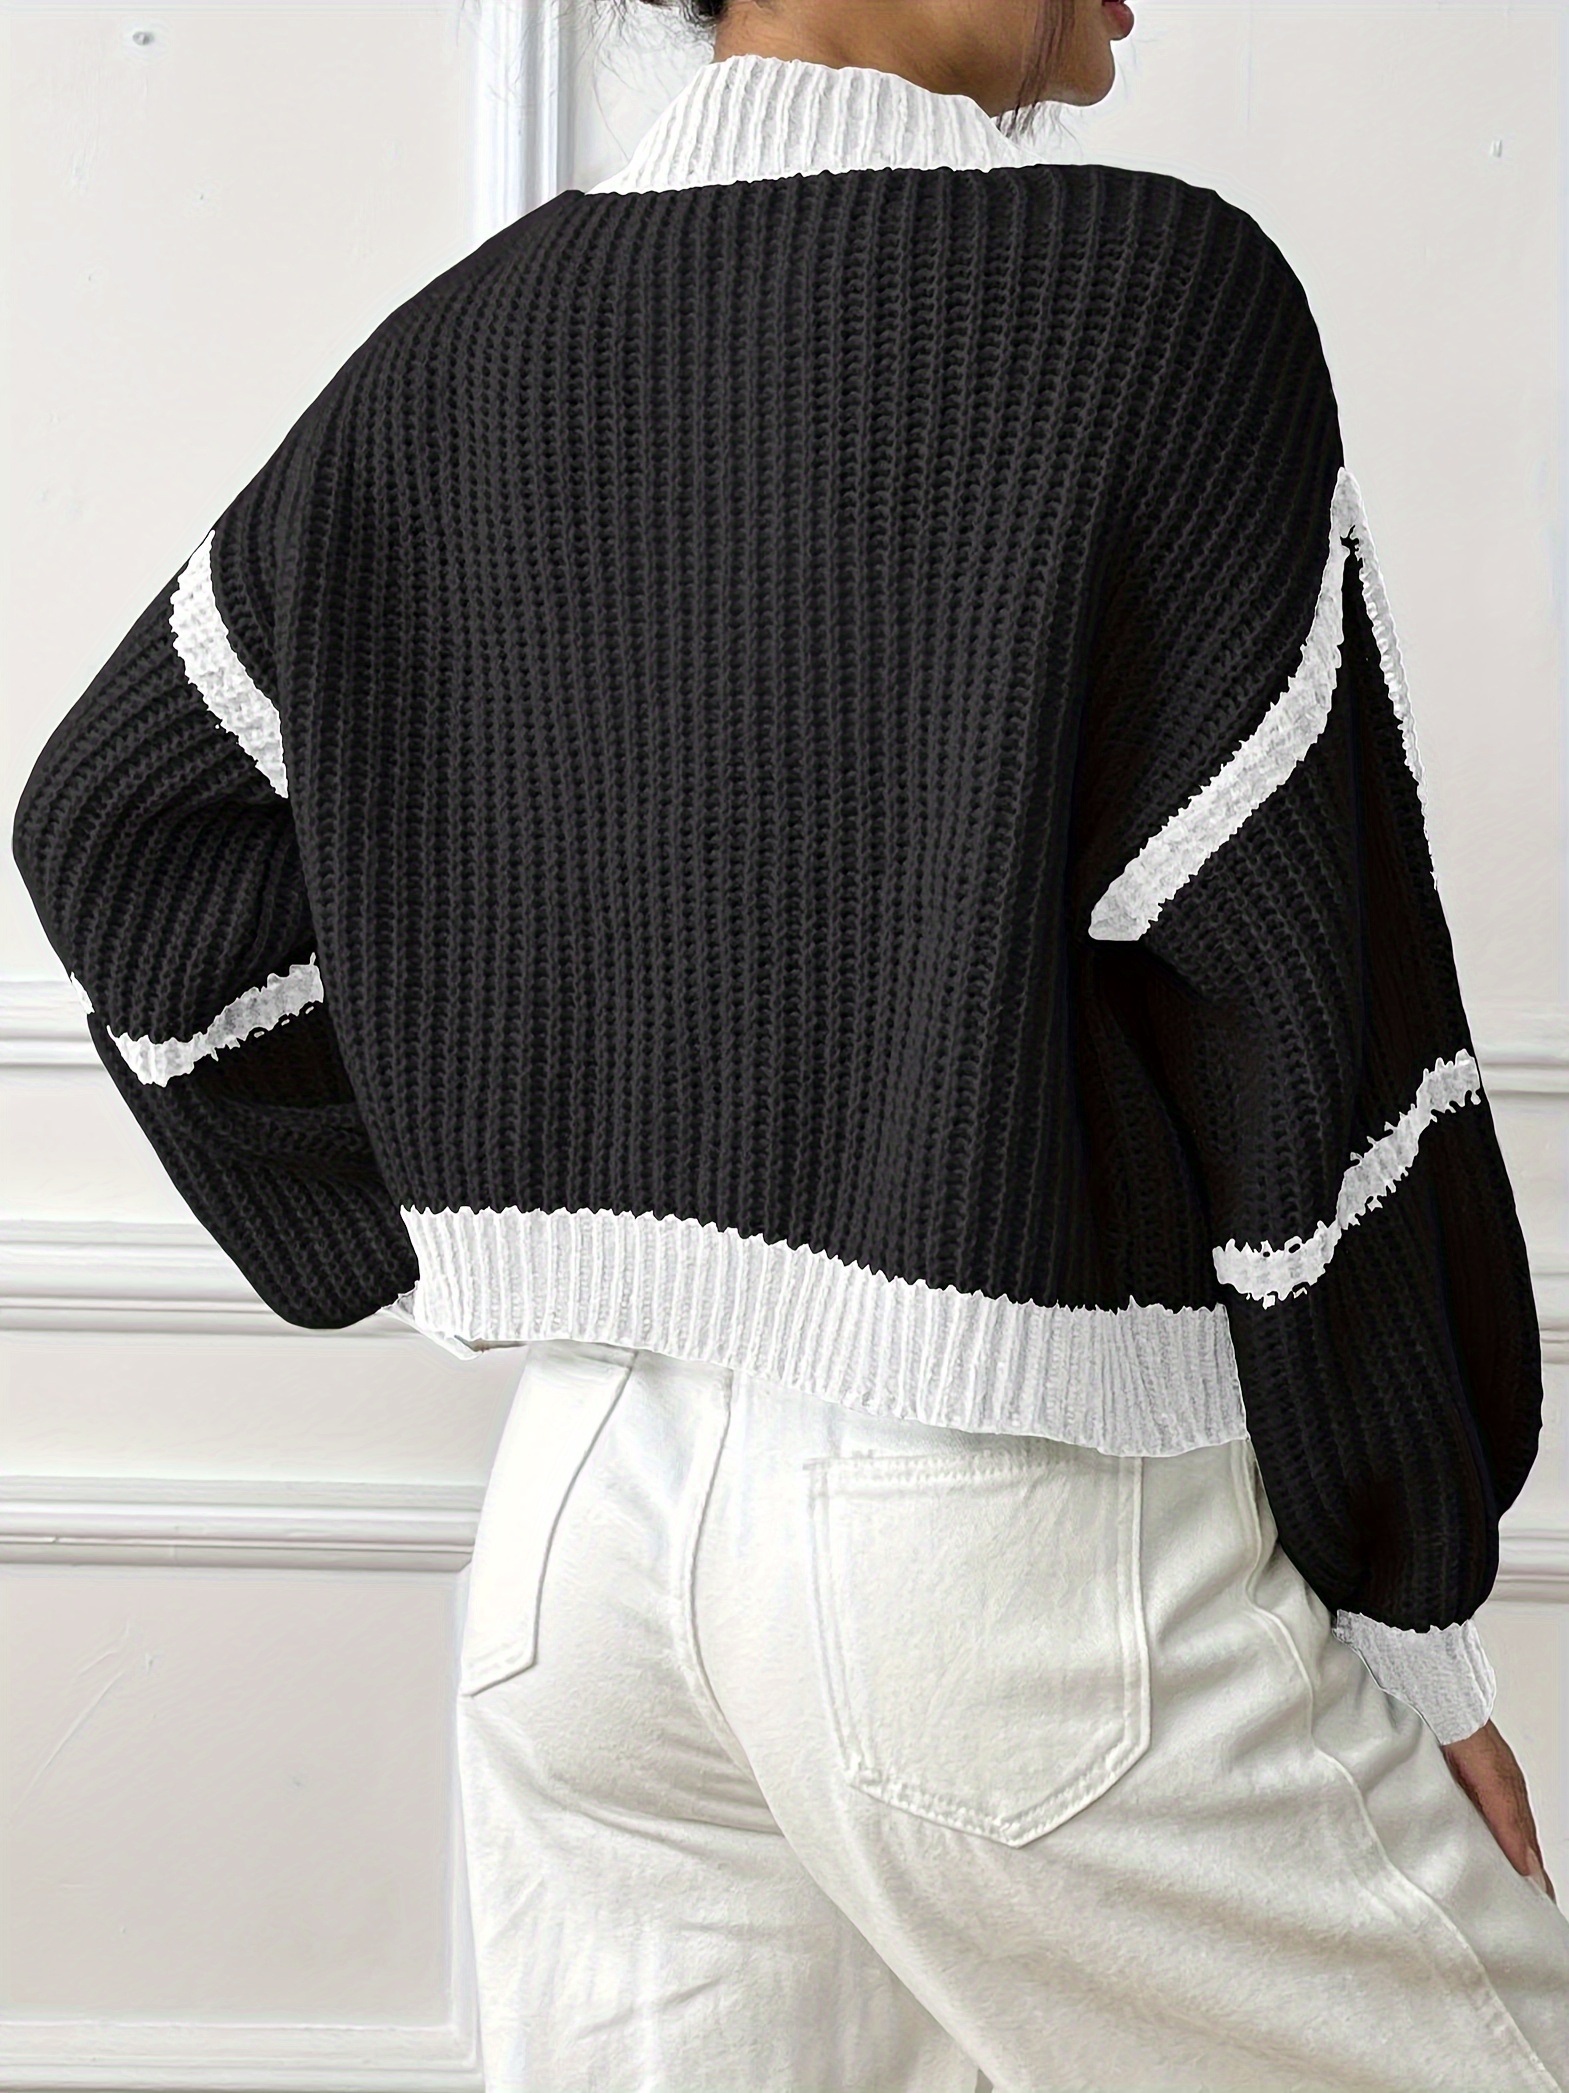 Cardigan Sweaters Outwear For Women Knit Contrast Stitch Crop